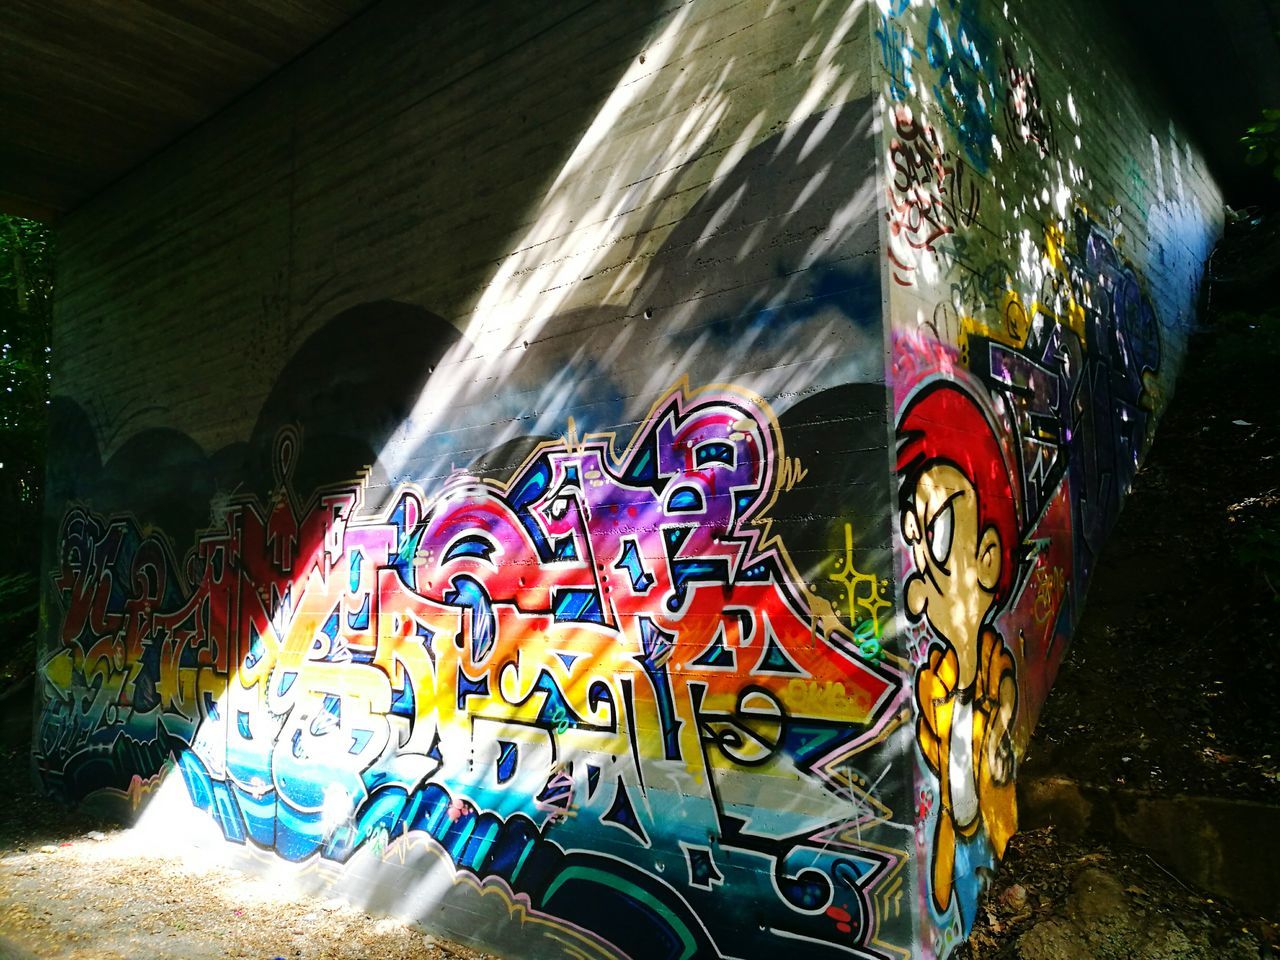 Hidden Graffiti